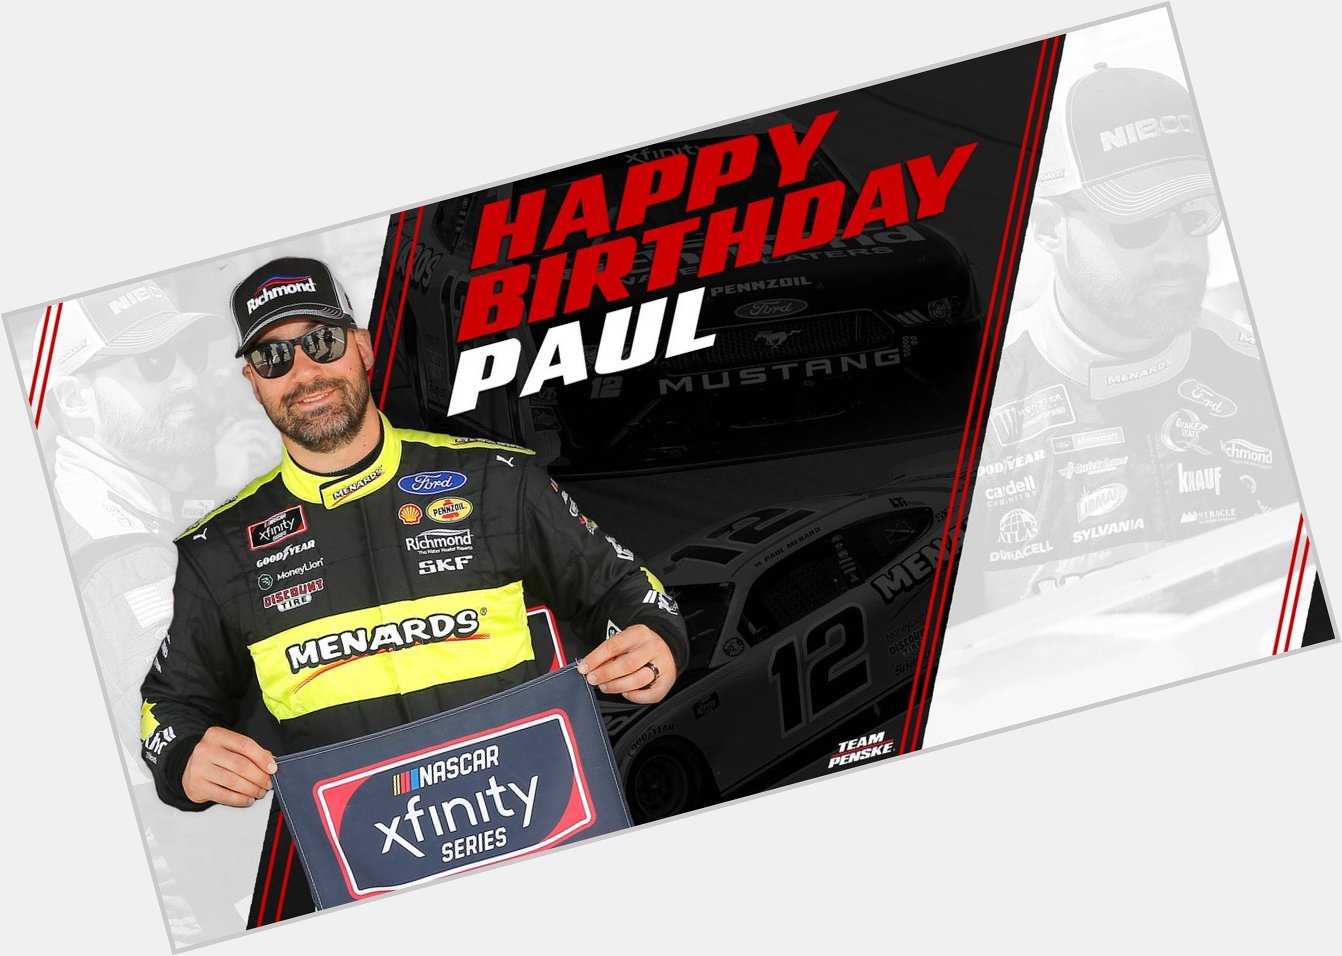 Happy birthday, Paul Menard! 

Remessage to help us wish Paul a happy birthday.   